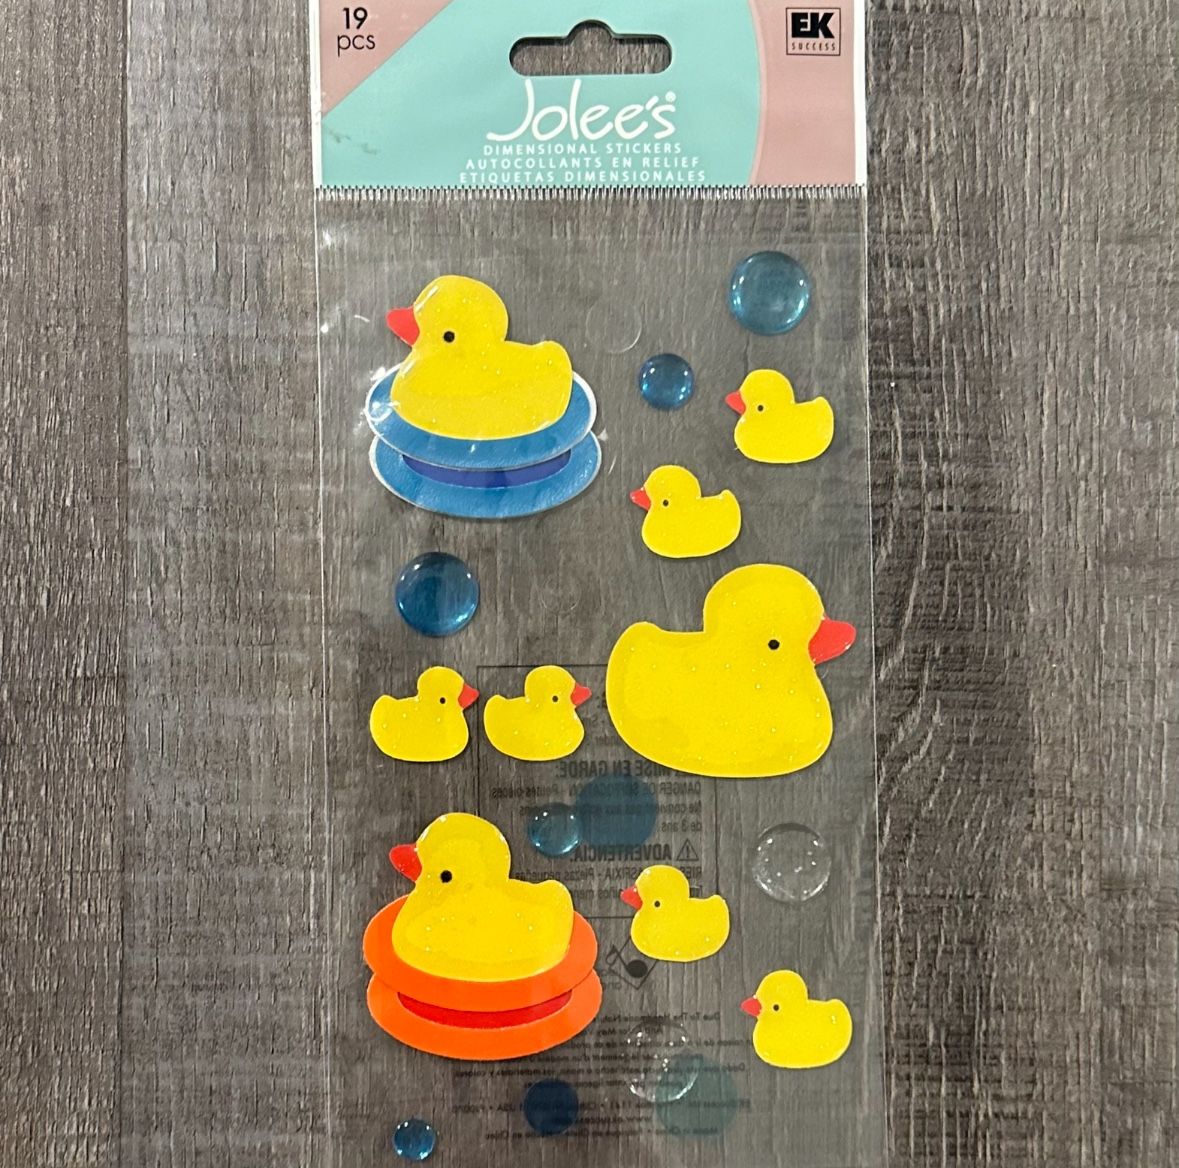 New Jolee’s Rubber Duckie Dimensional Scrapbook Stickers